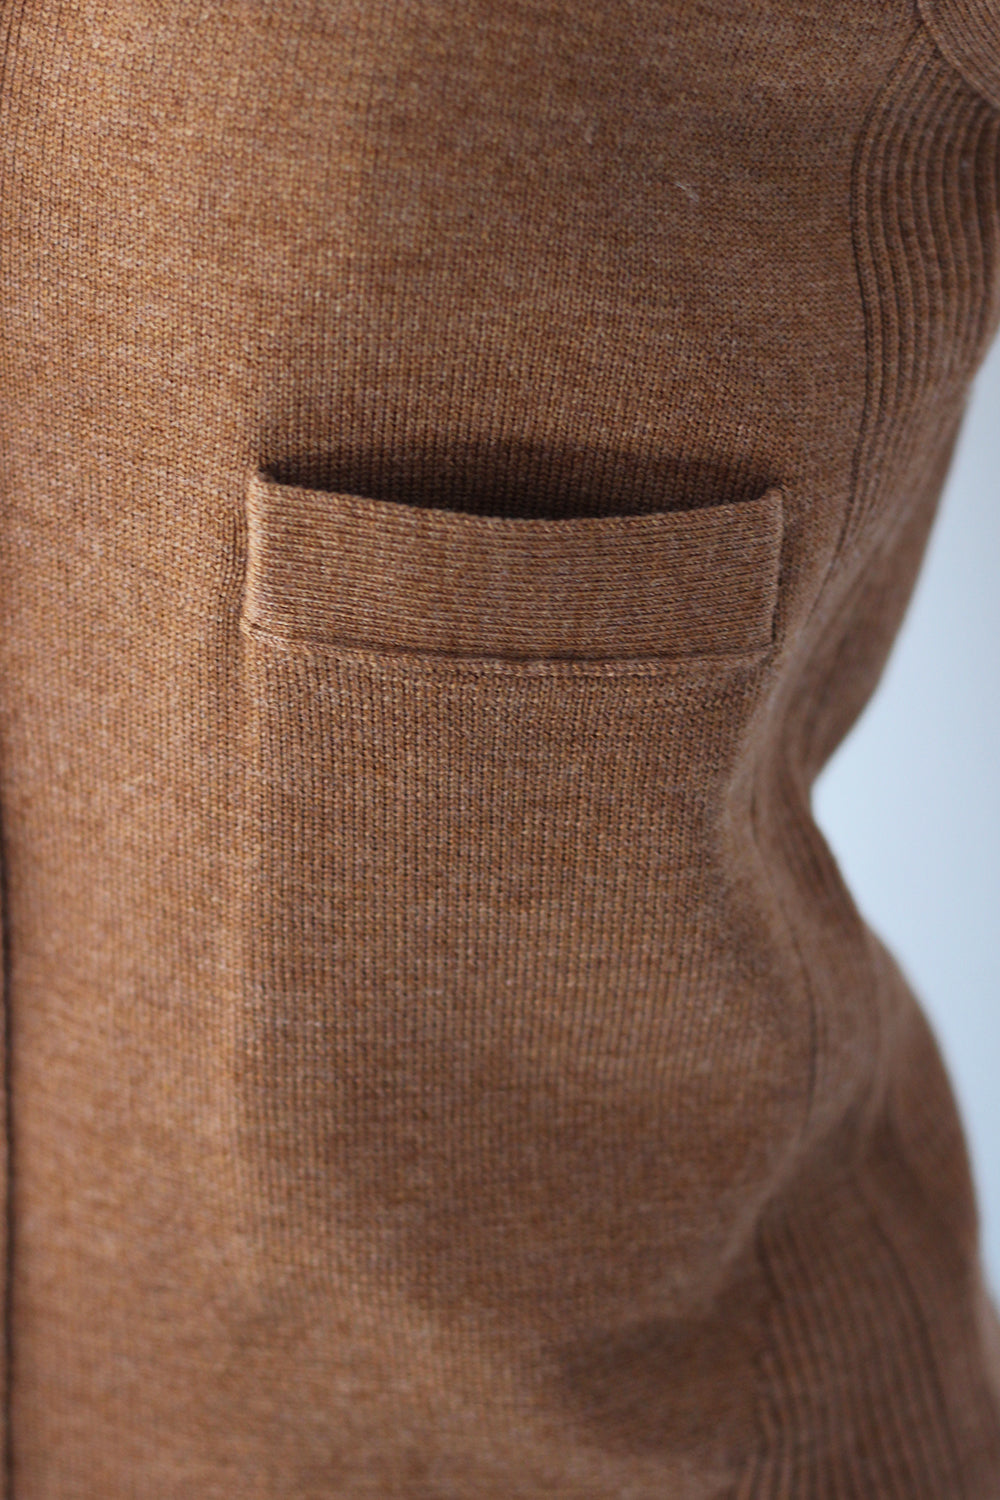 JUN MIKAMI "knit vest" (camel)